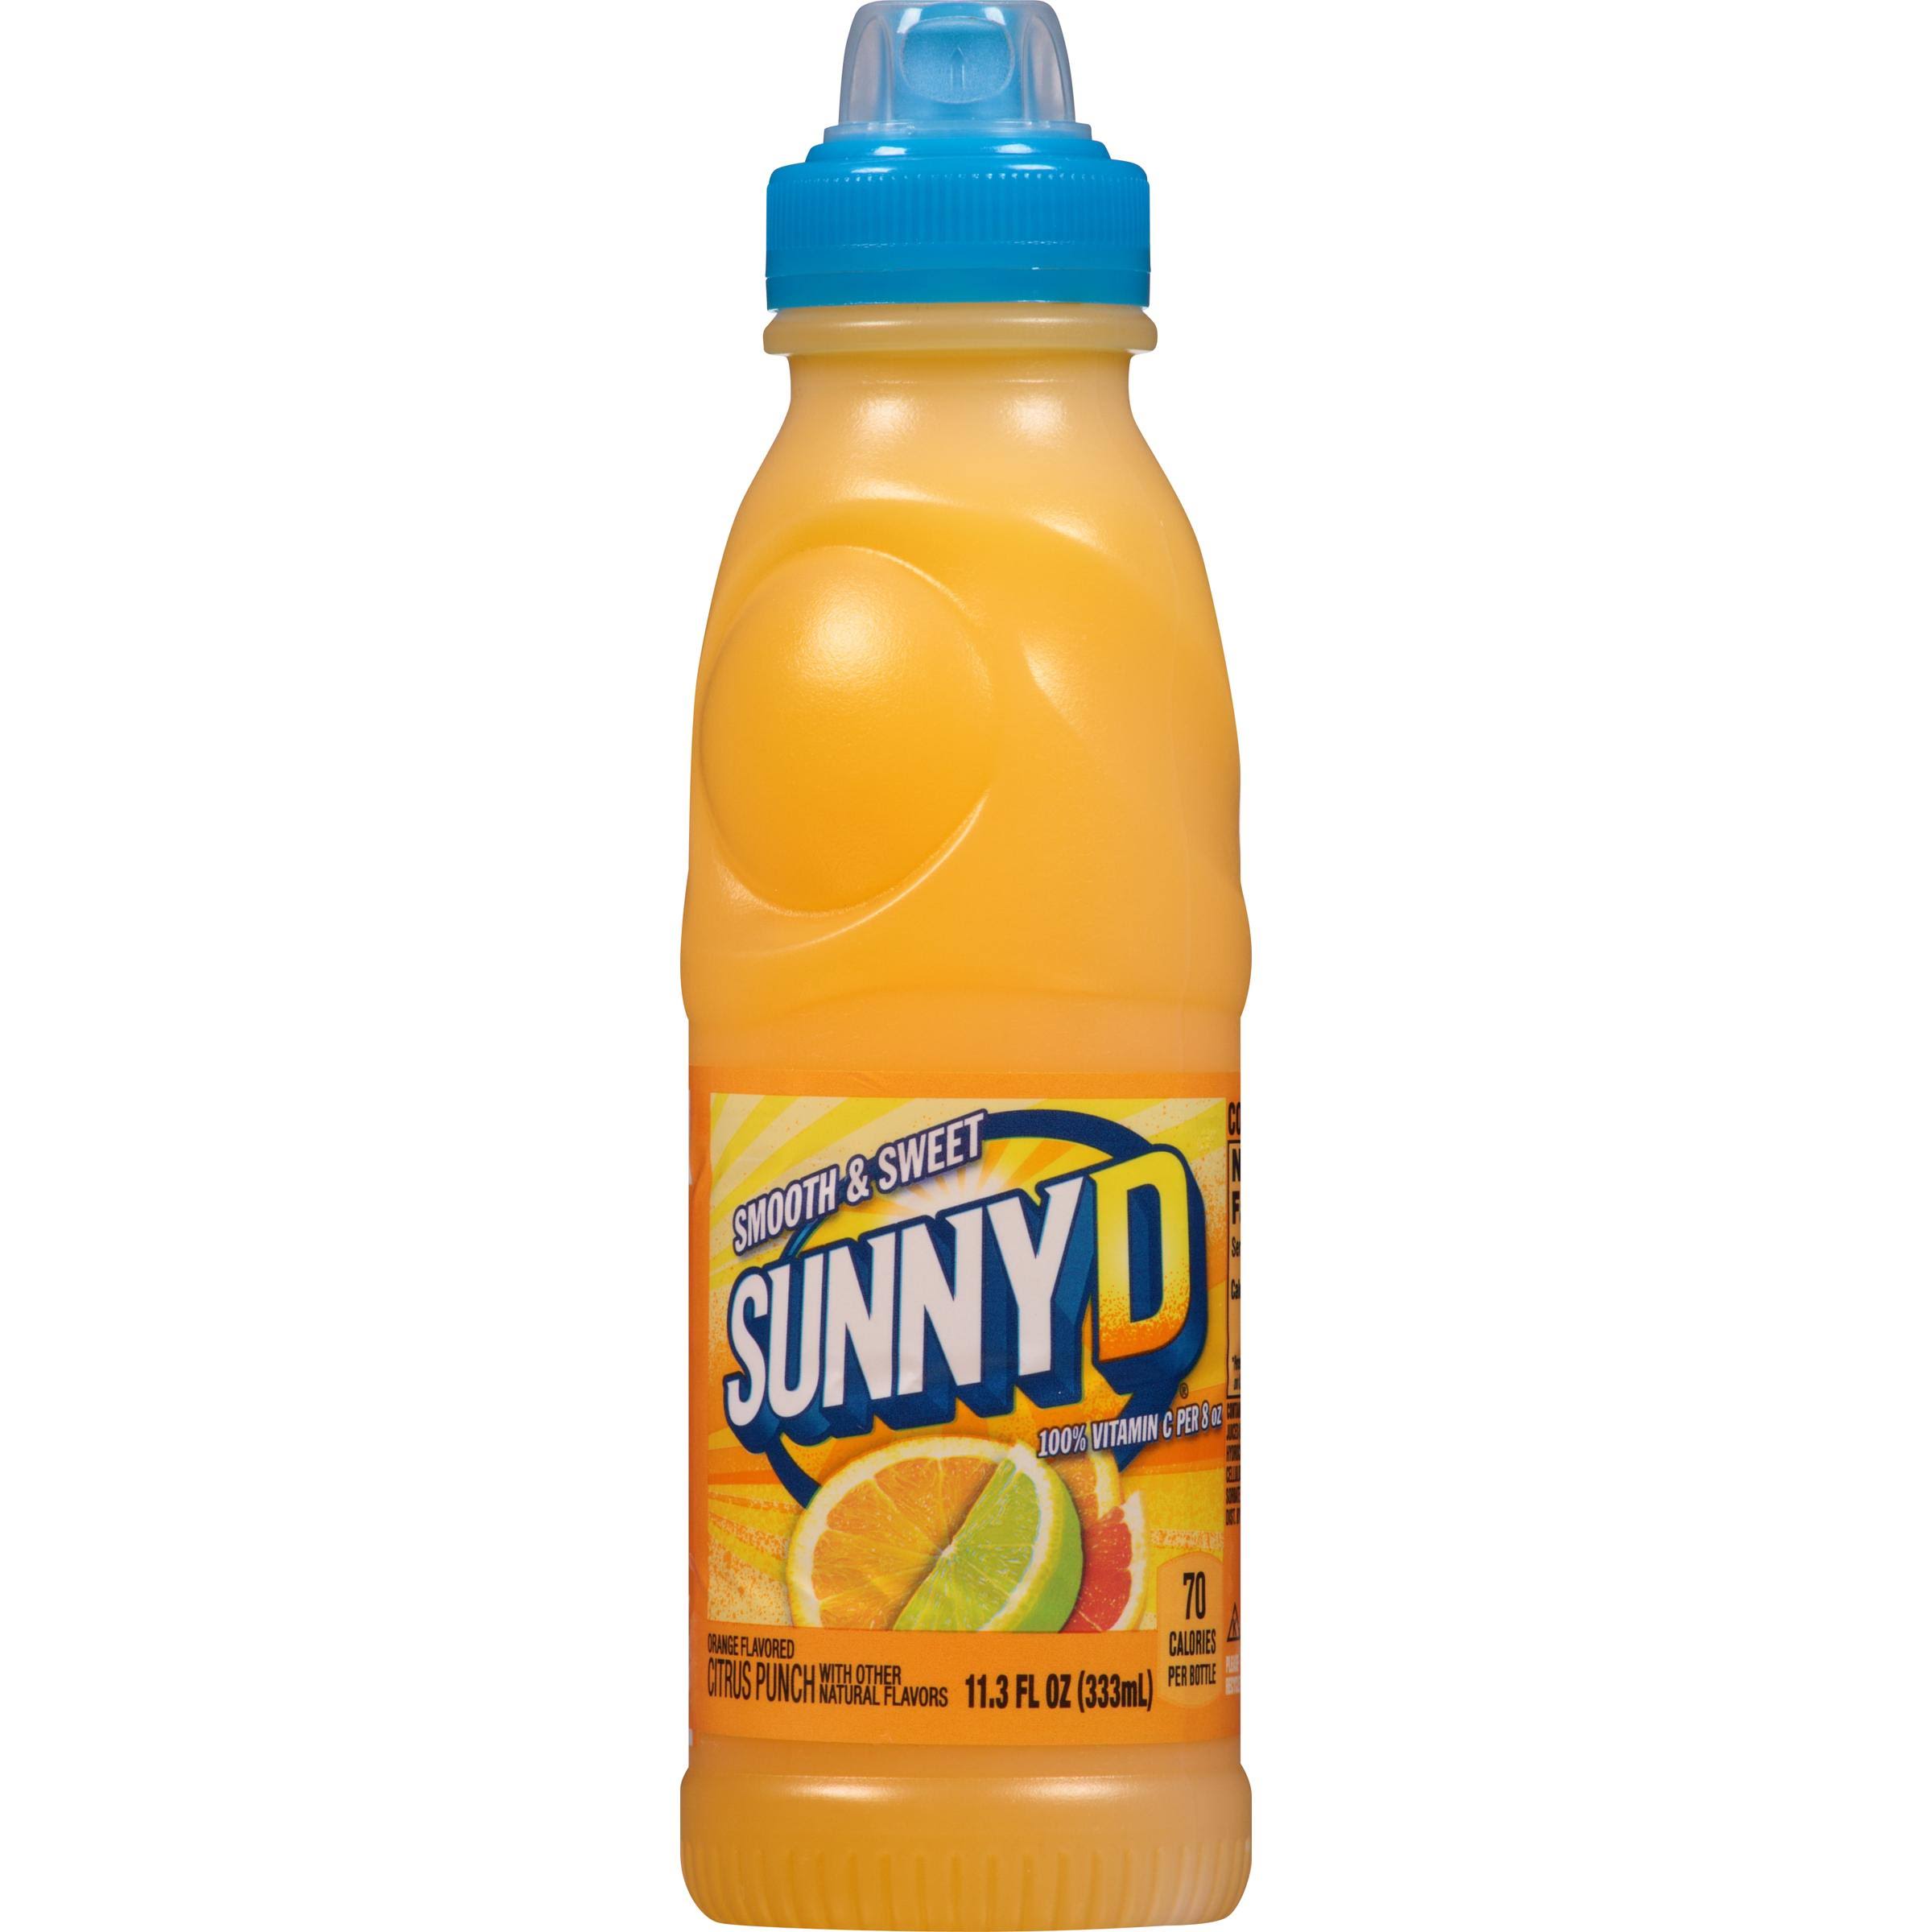 Sunny D Orange Flavored Citrus Punch - 11.3oz